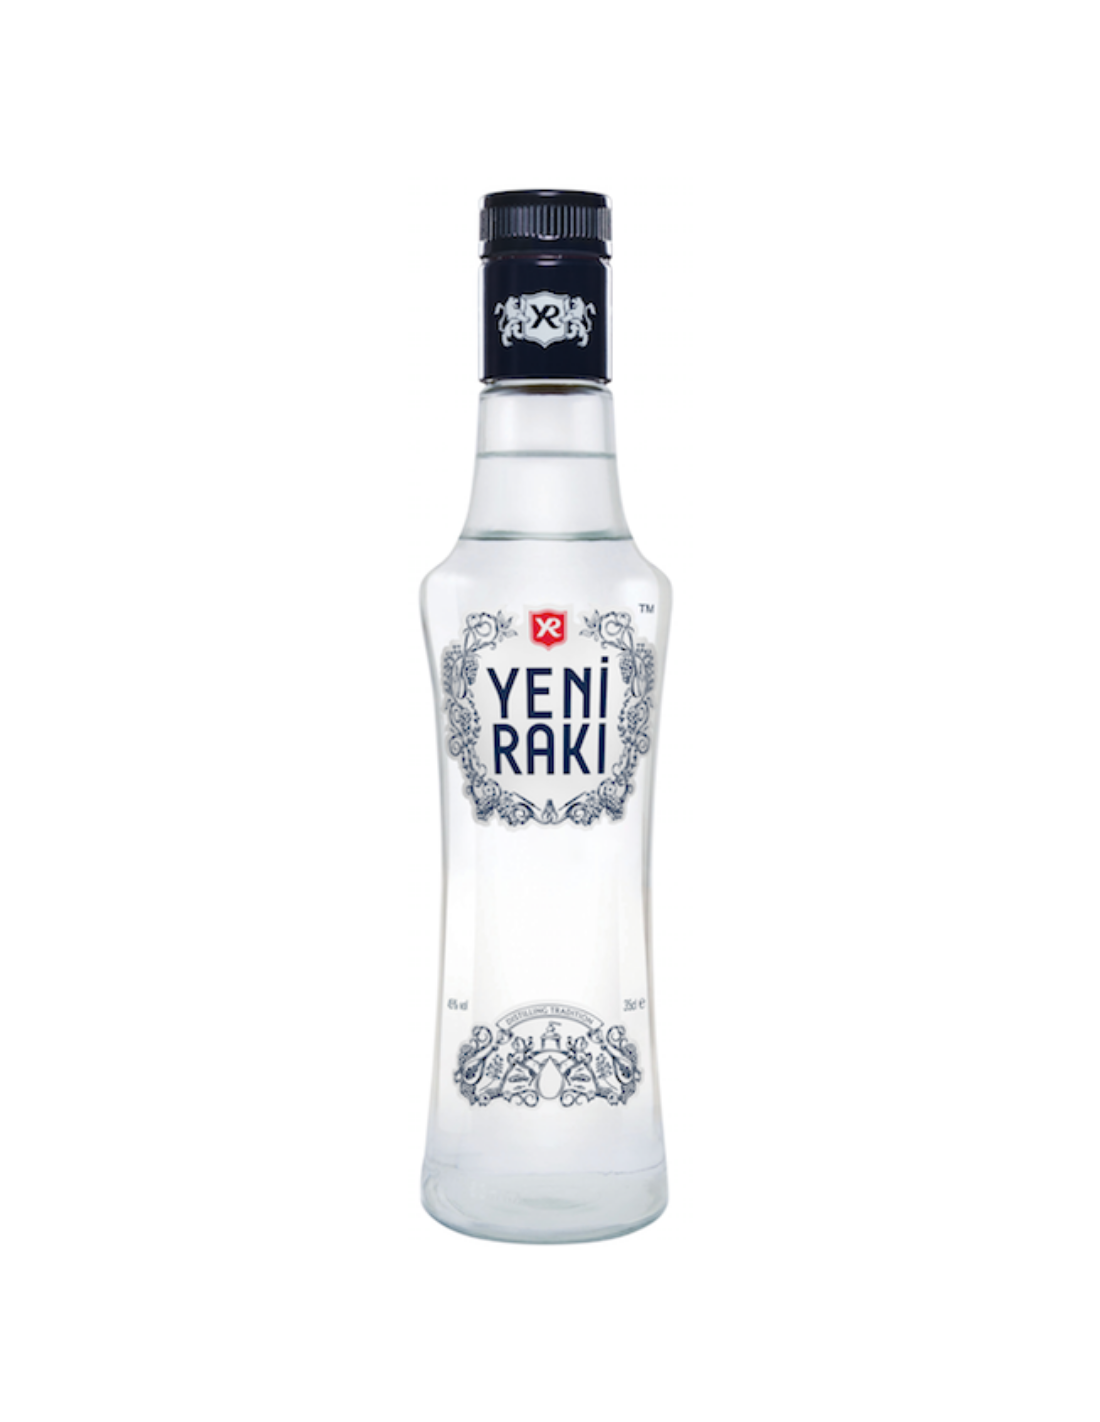 Bautura traditionala Yeni Raki, 45% alc., 0.35L, Turcia alcooldiscount.ro